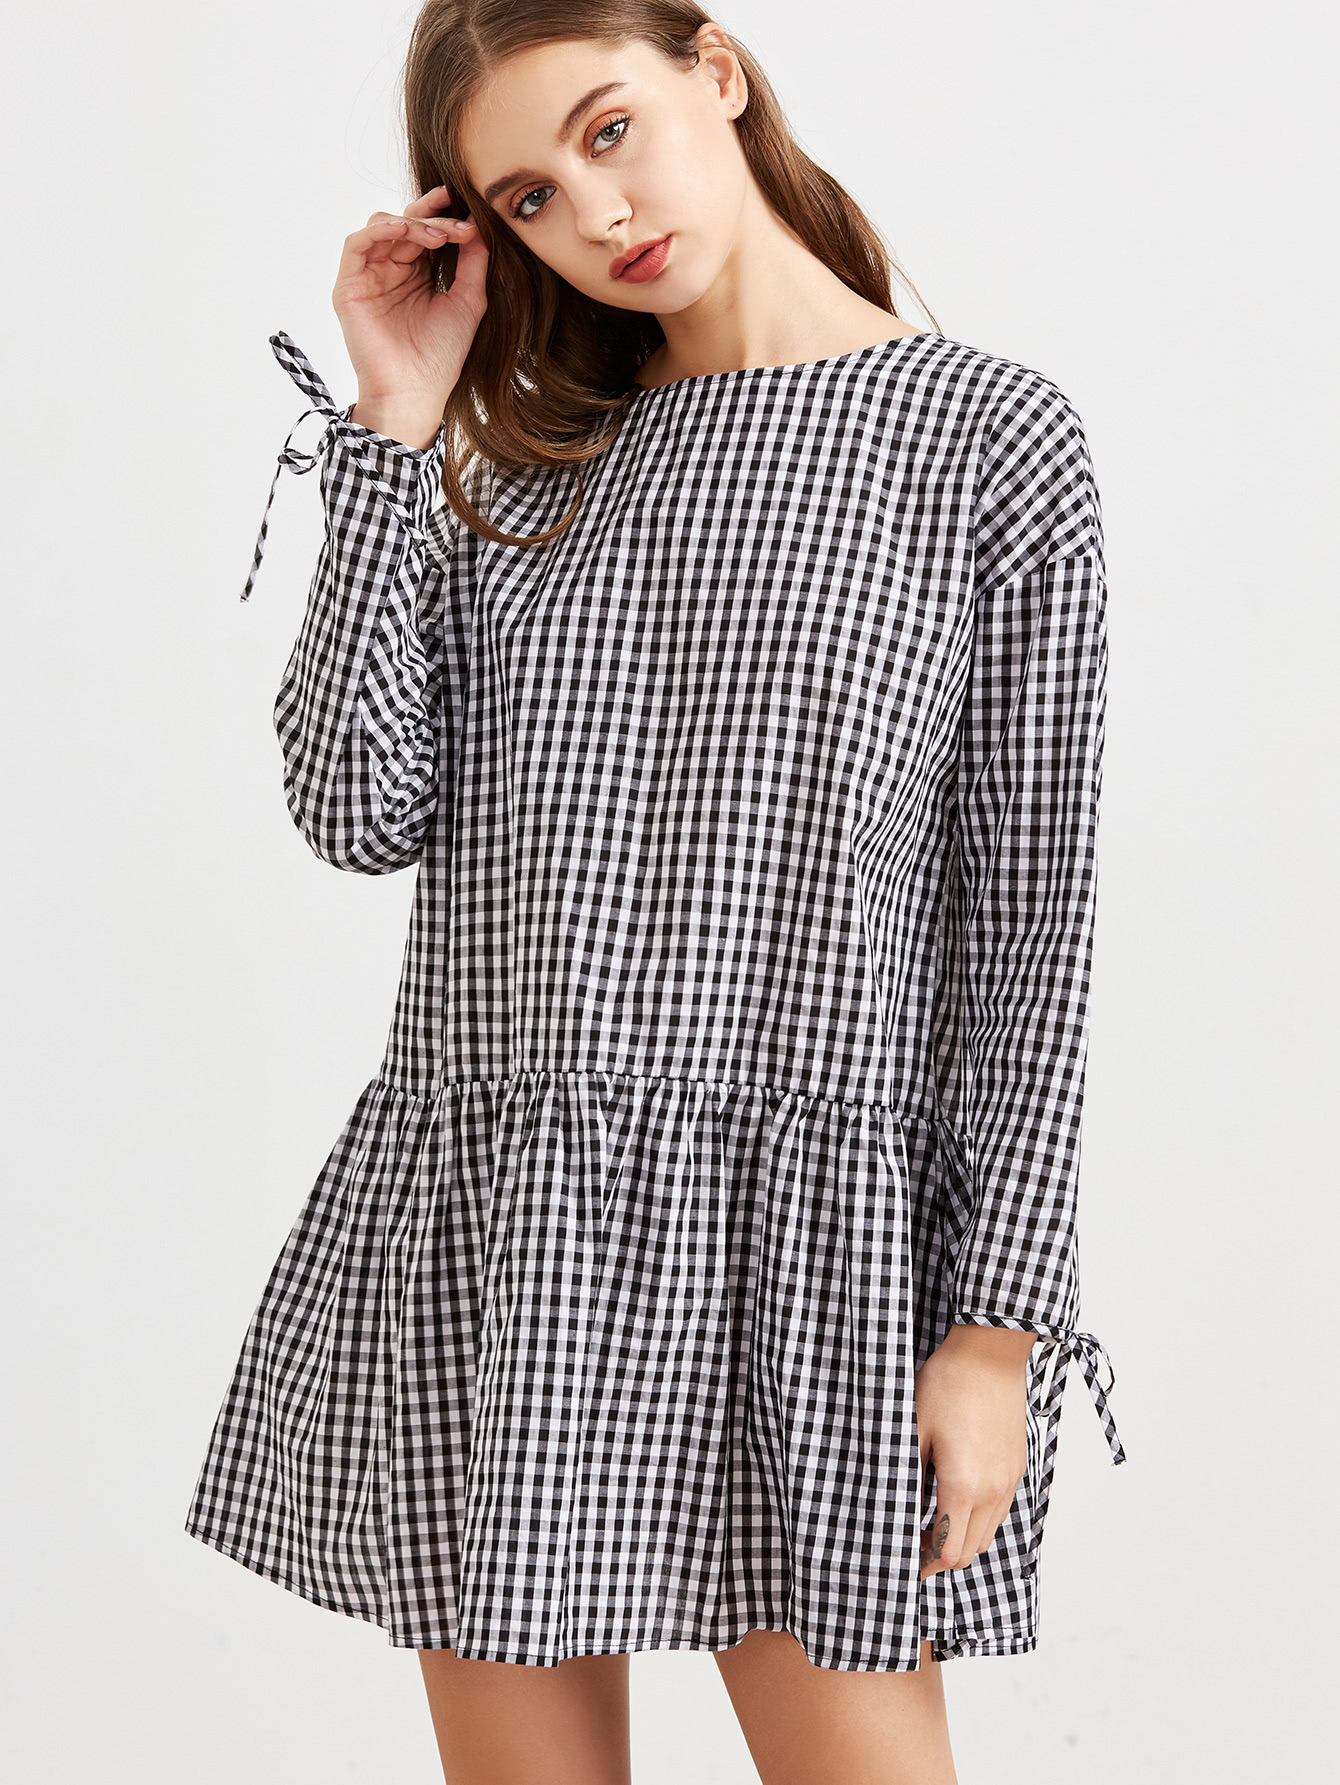 Black And White Checkered Dress | Good Dresses